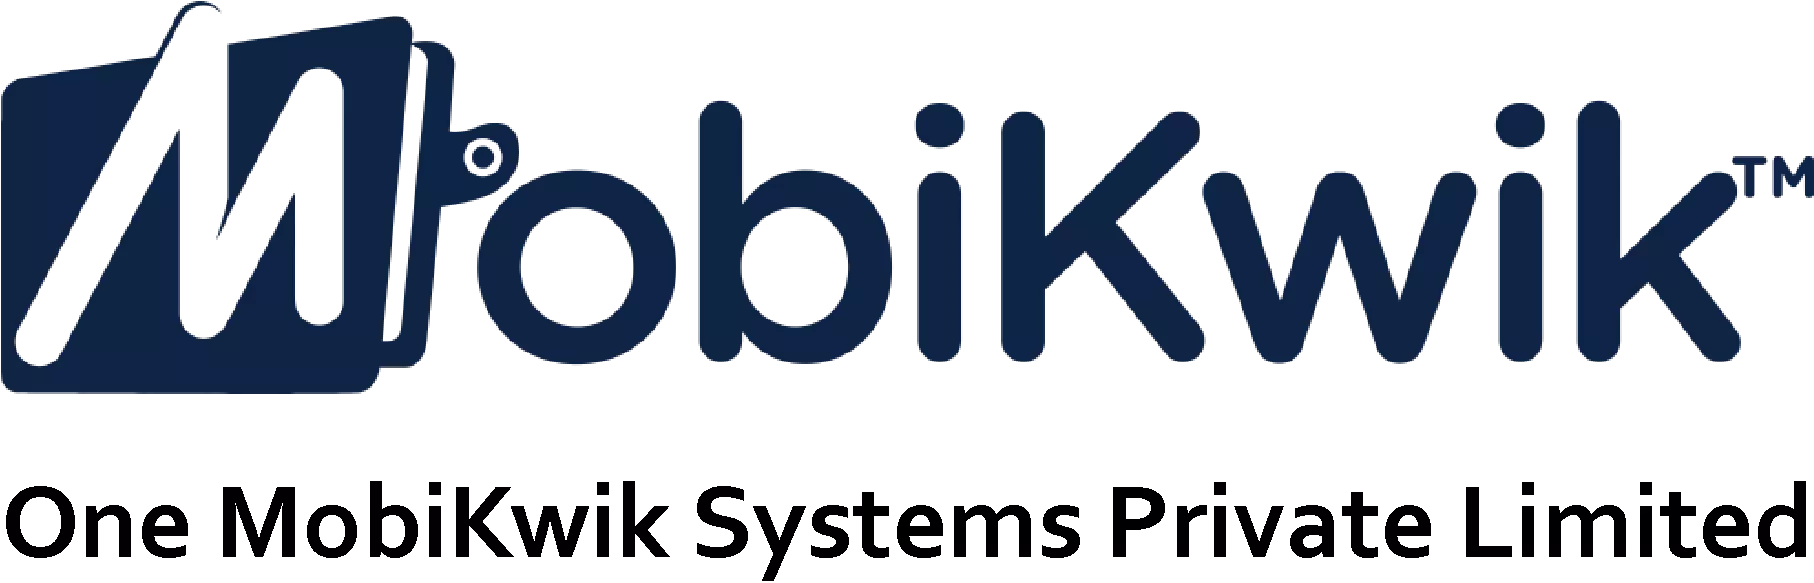 Mobikwik Logo 1